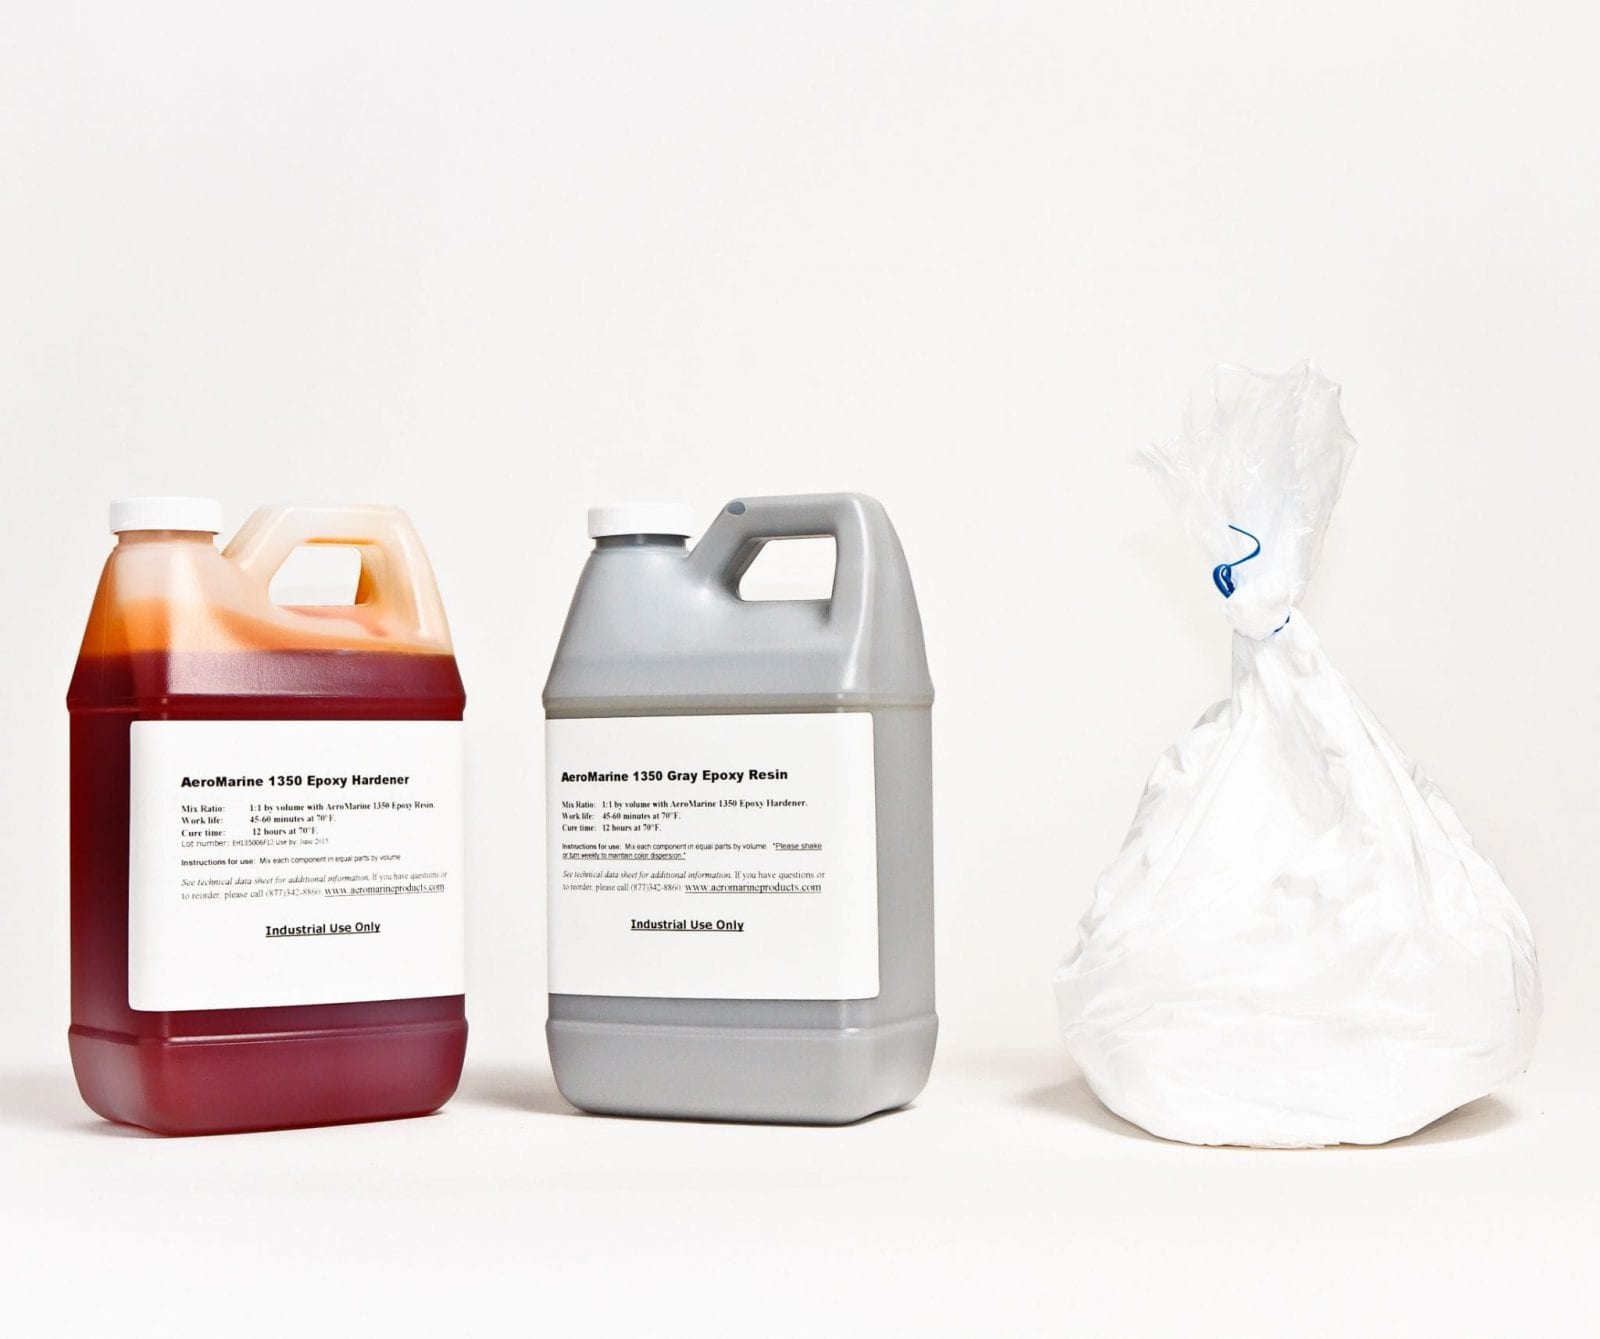 300/11 Clear Potting and Encapsulation Epoxy Resin - 2 Gallon Kit